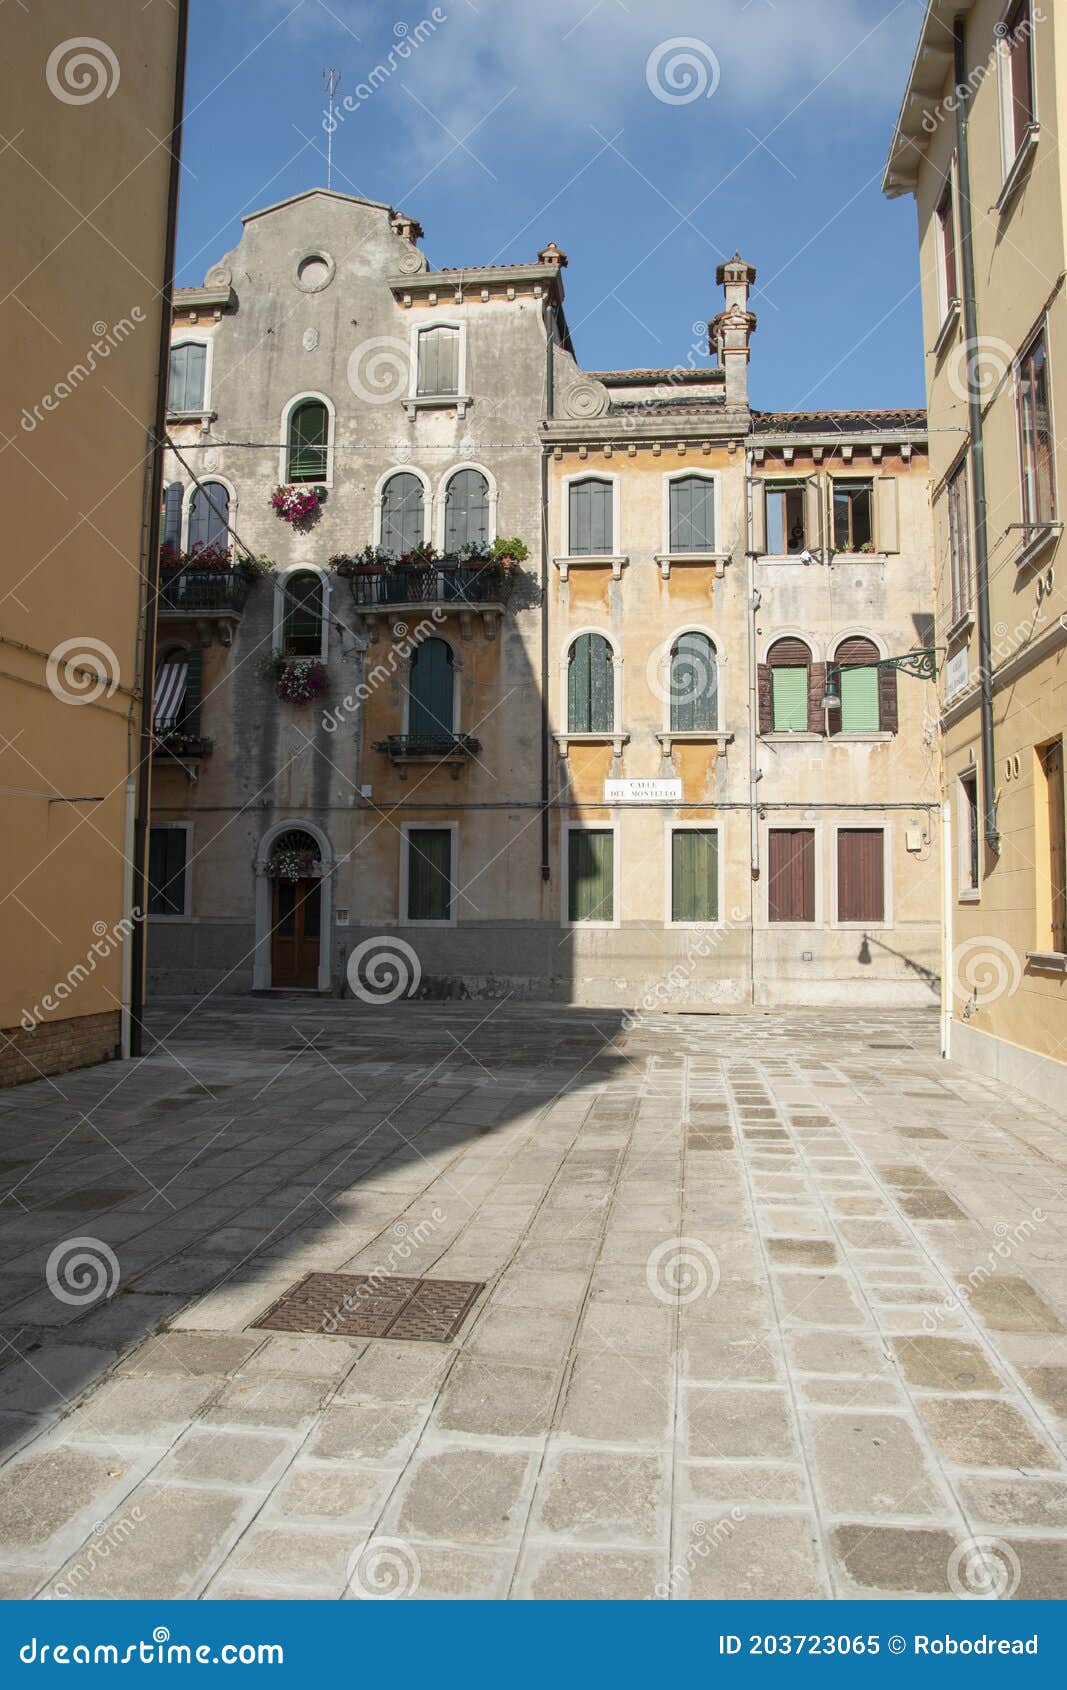 sestiere di castello in venice with its characteristic buildings